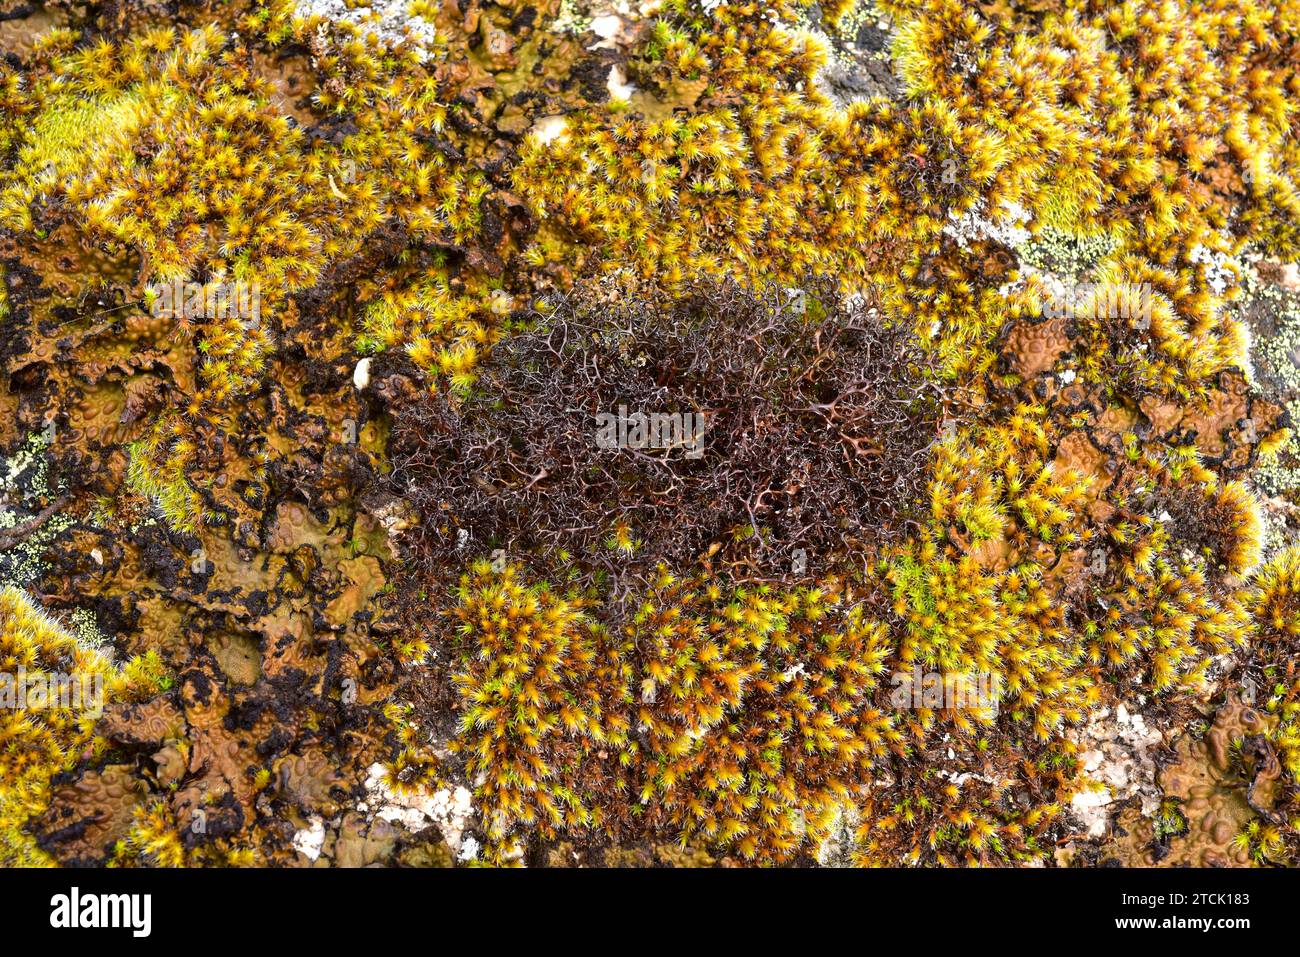 In the middle Cetraria aculeata a fruticulose lichen; at left and at rigth Lasallia pustulata or Umbilicaria pustulata a foliose lichen. This photo wa Stock Photo